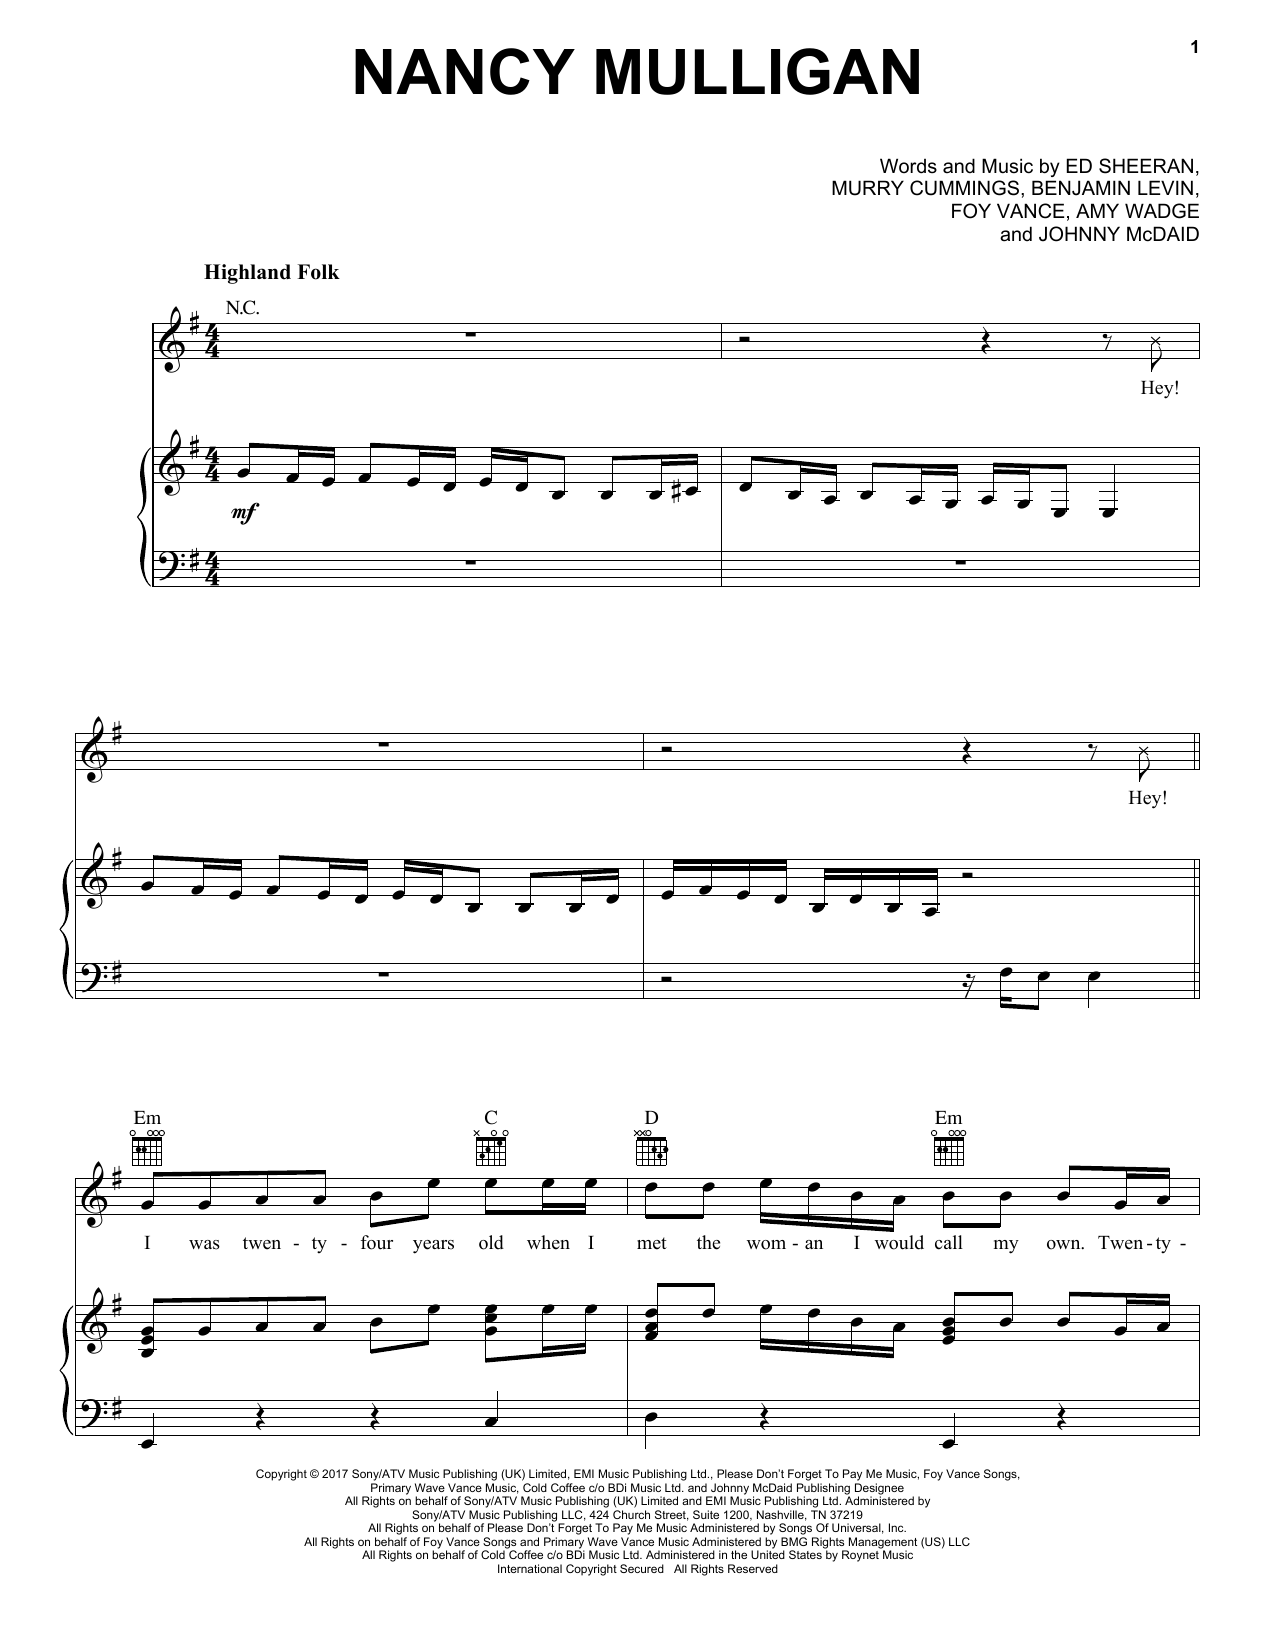 Ed Sheeran Nancy Mulligan Sheet Music Notes & Chords for Piano, Vocal & Guitar (Right-Hand Melody) - Download or Print PDF